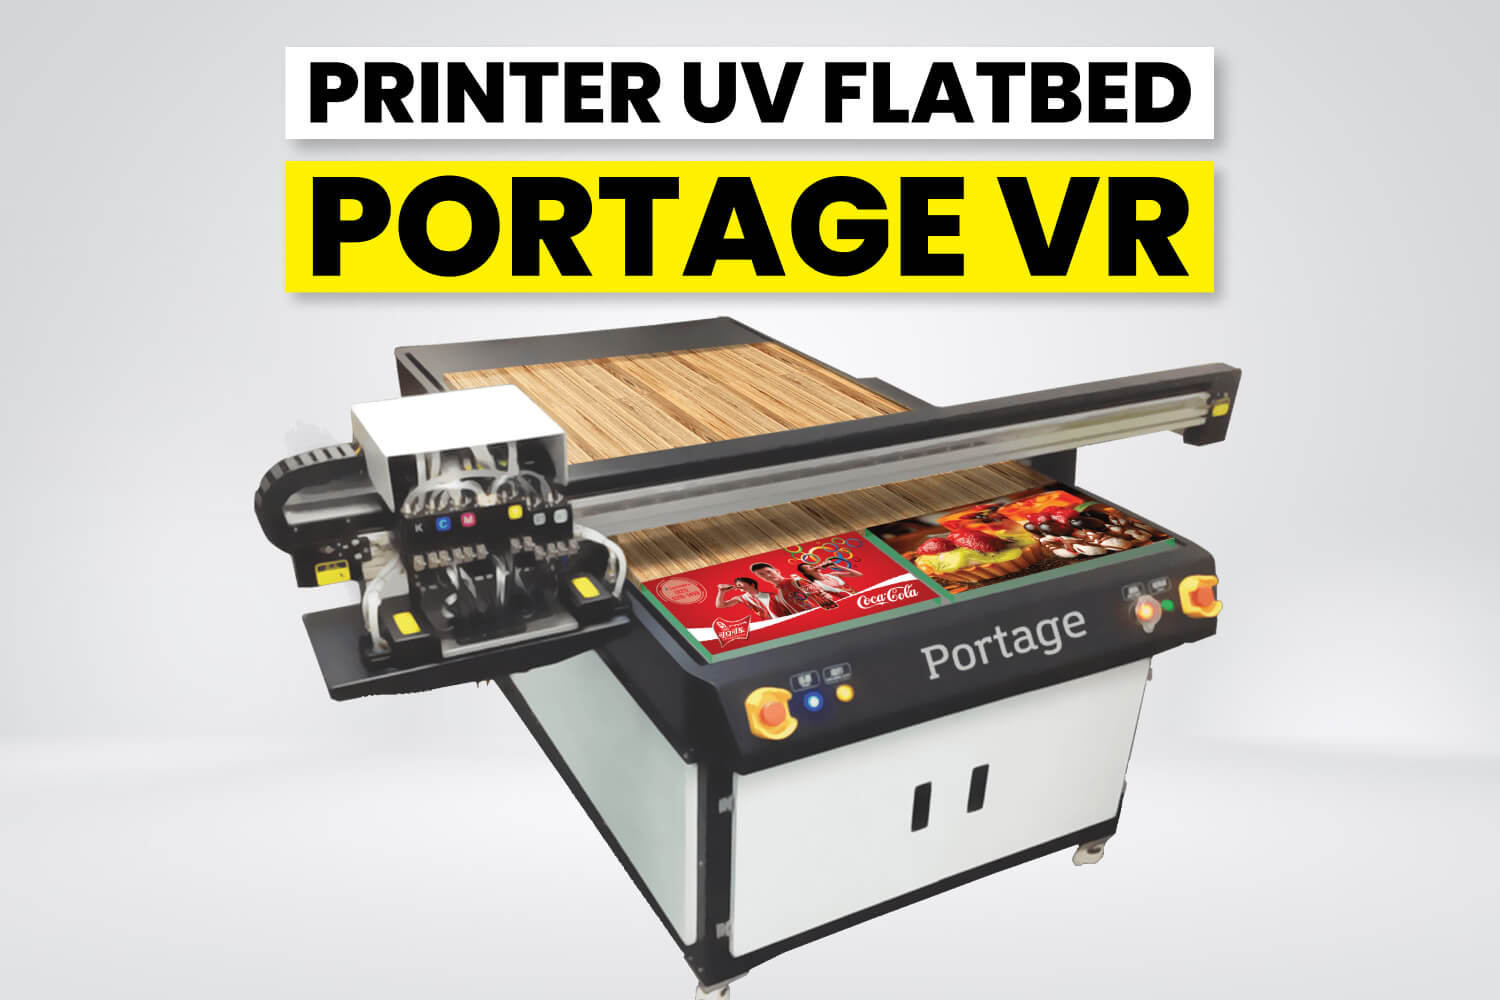 Printer Uv Flatbed Portage Vr